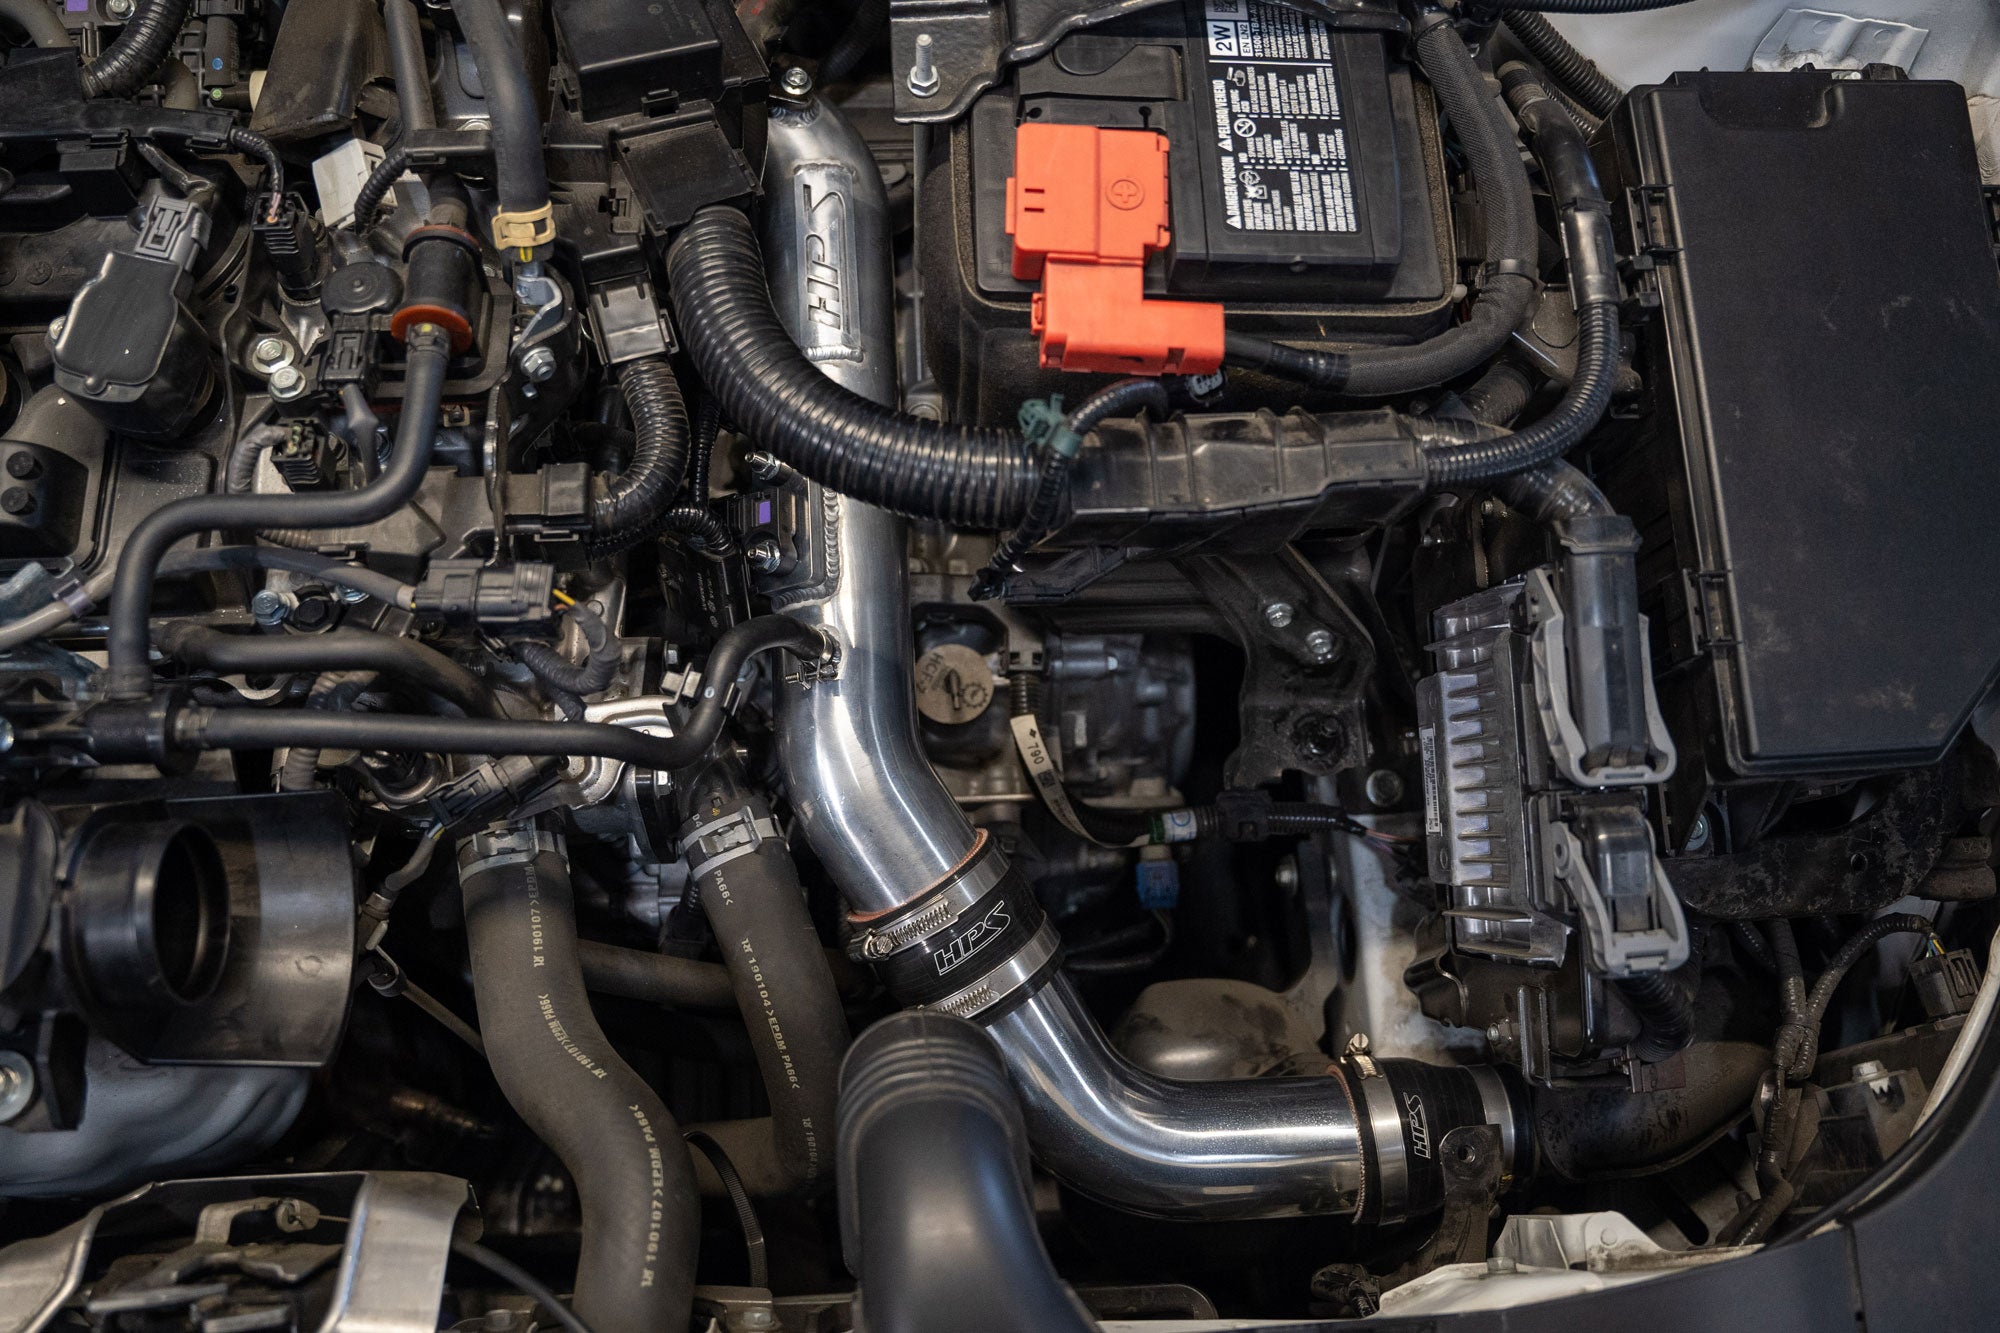 HPS Intercooler Charge Pipe Kit, Honda 2018-2021 Accord 1.5L Turbo, 17-134